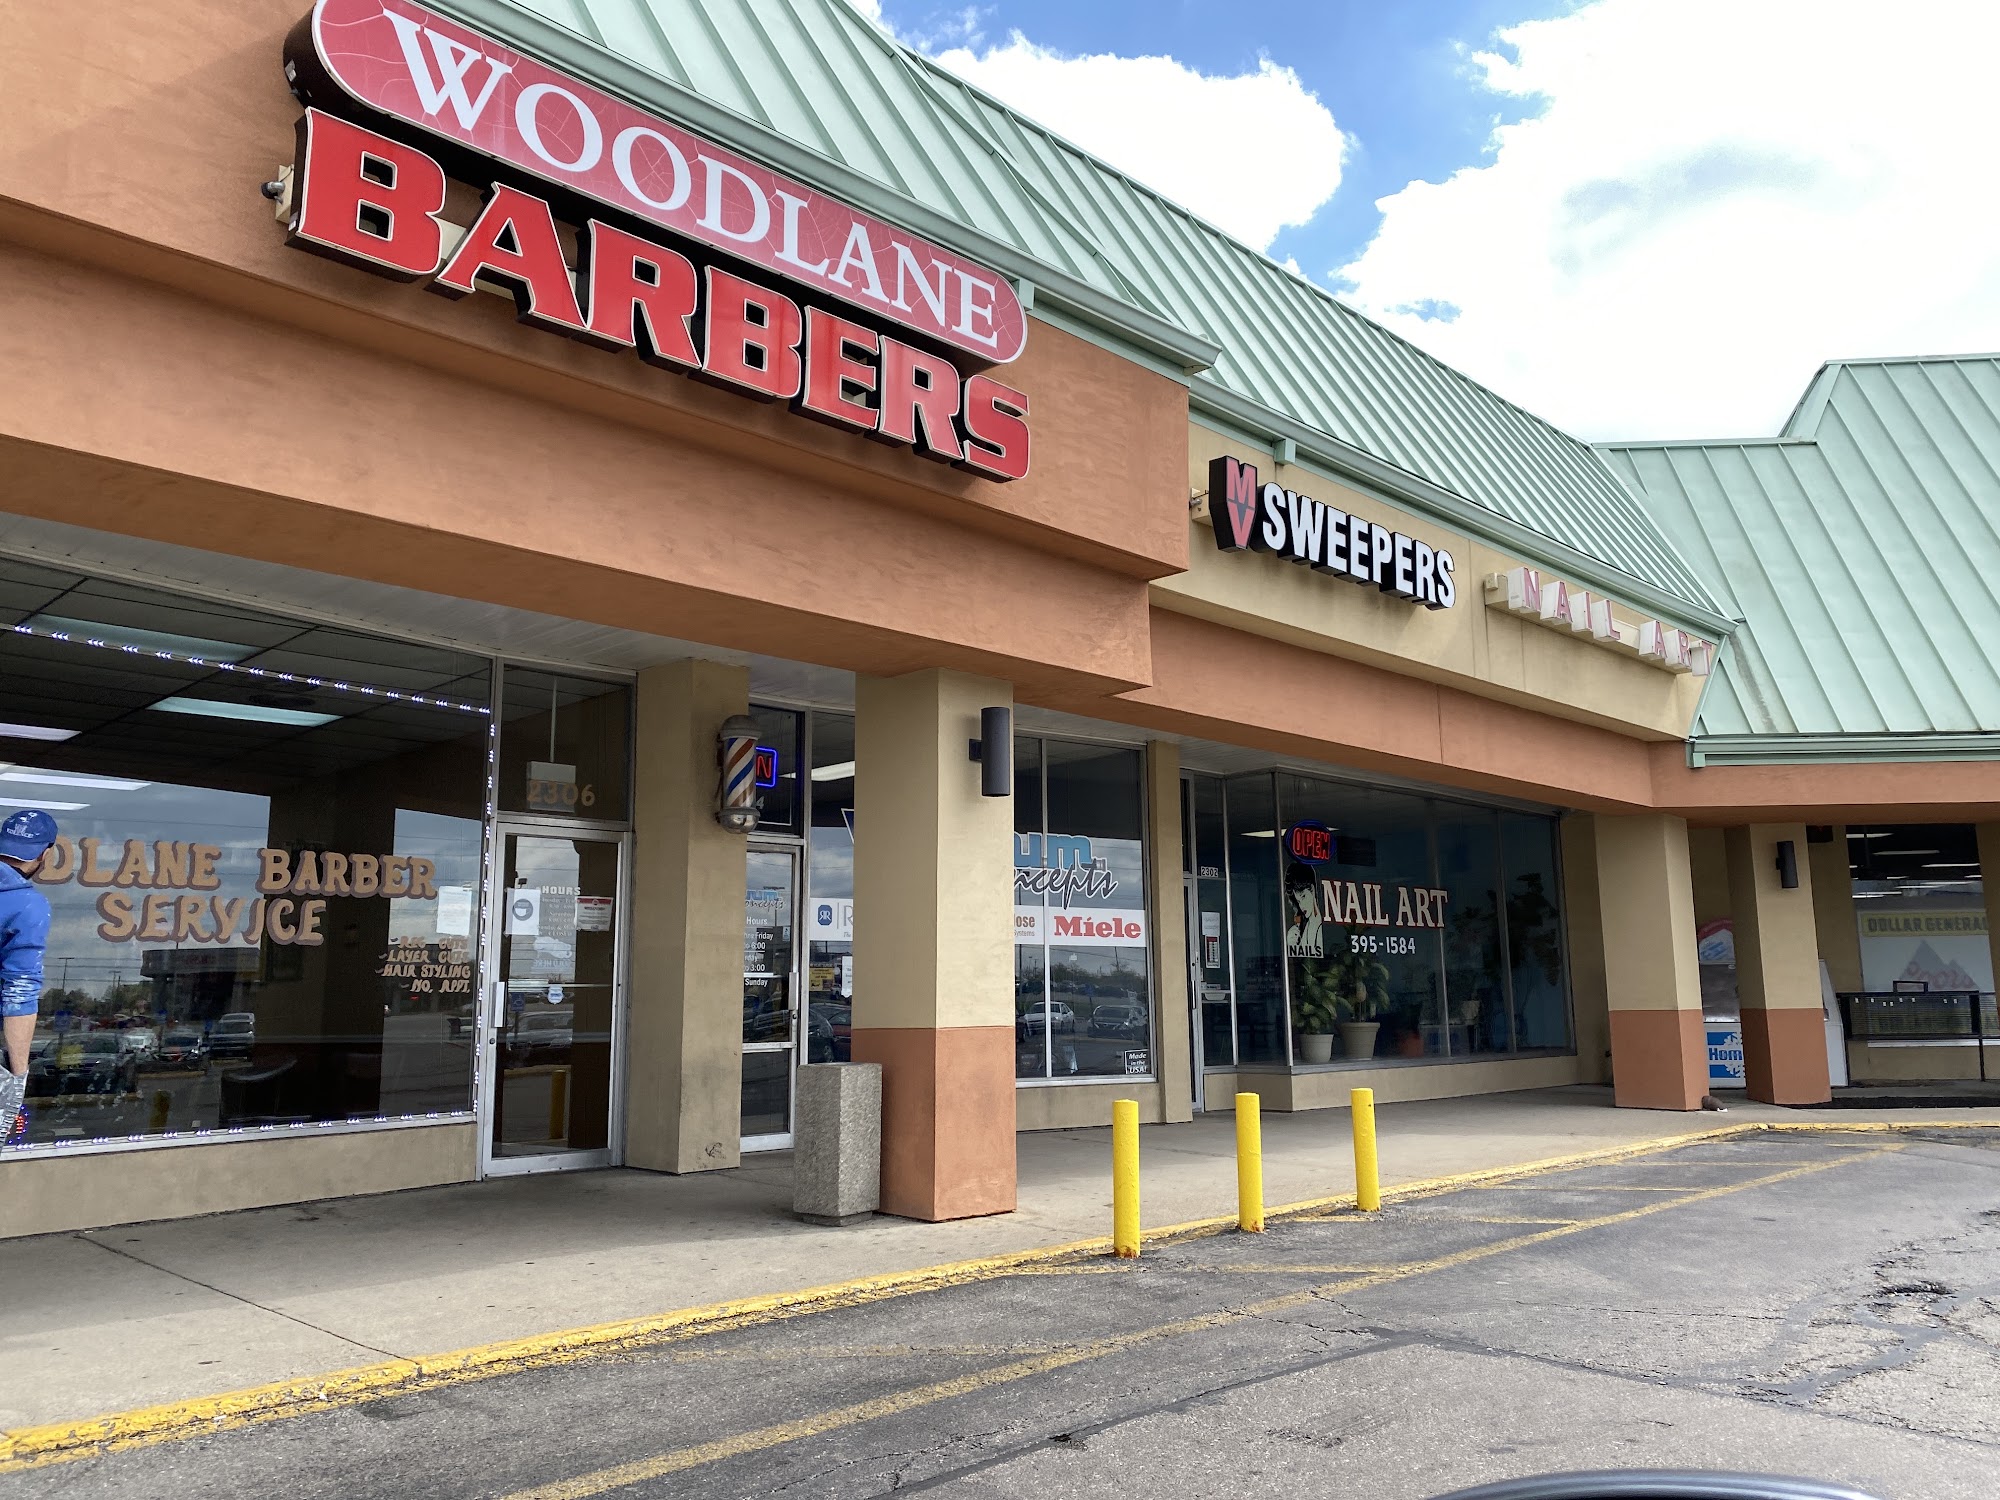 Woodlane Barber Service